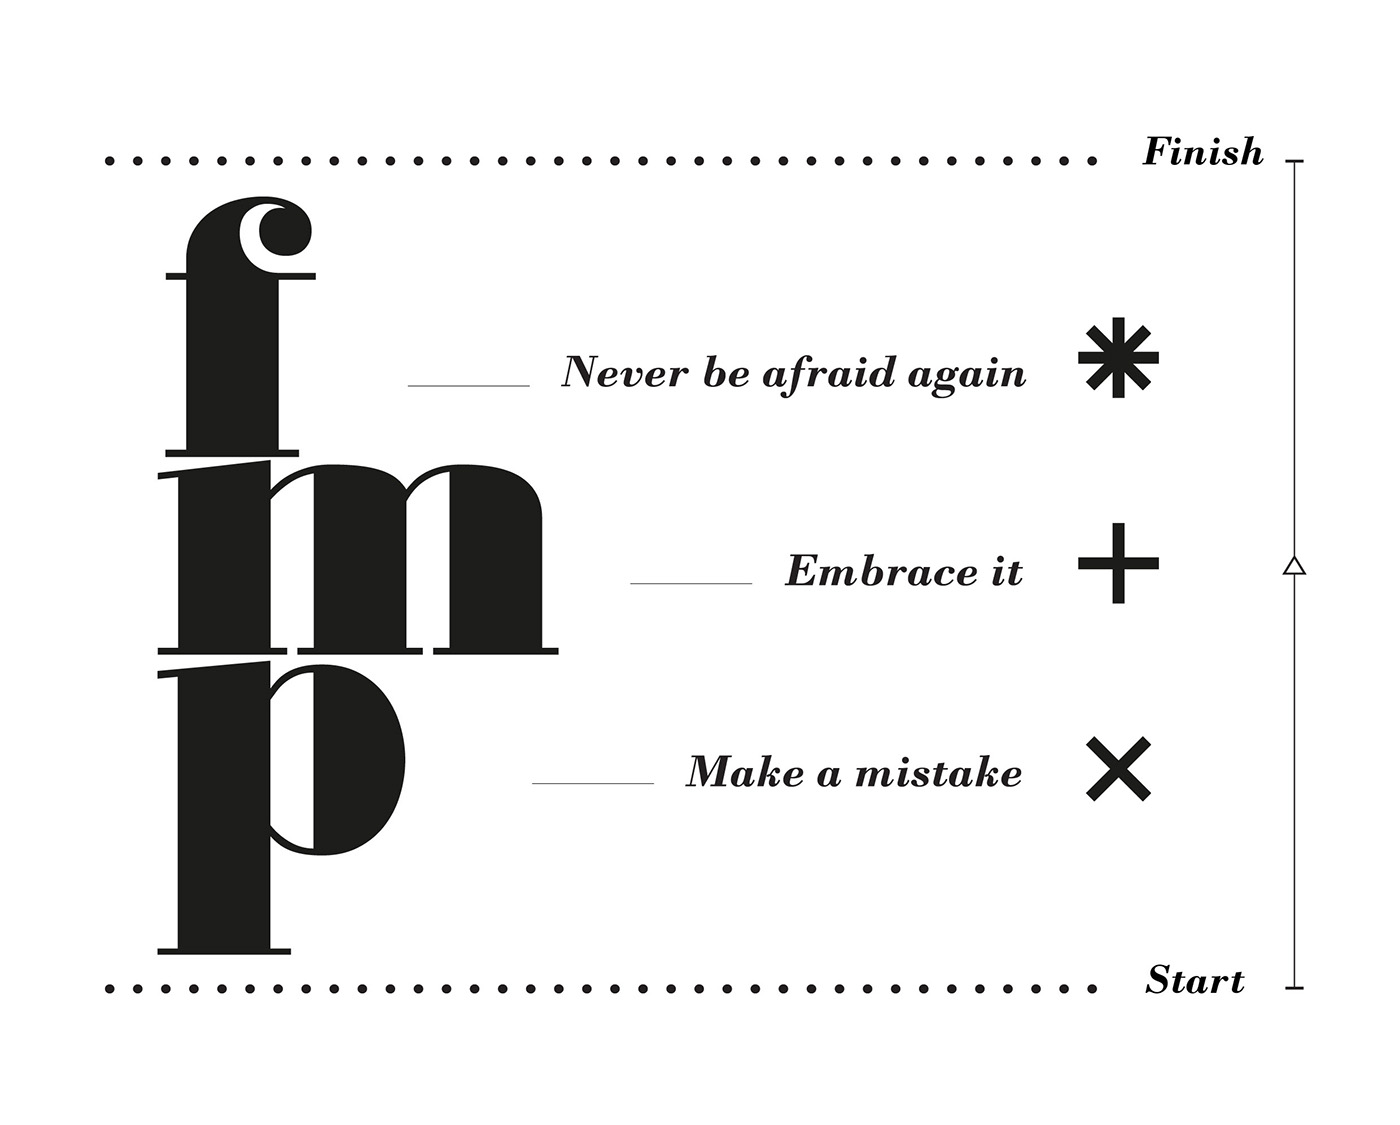 Mistakes failure asterisk ink minimal fear success inspiration Beautiful logo alternative final major project University concept